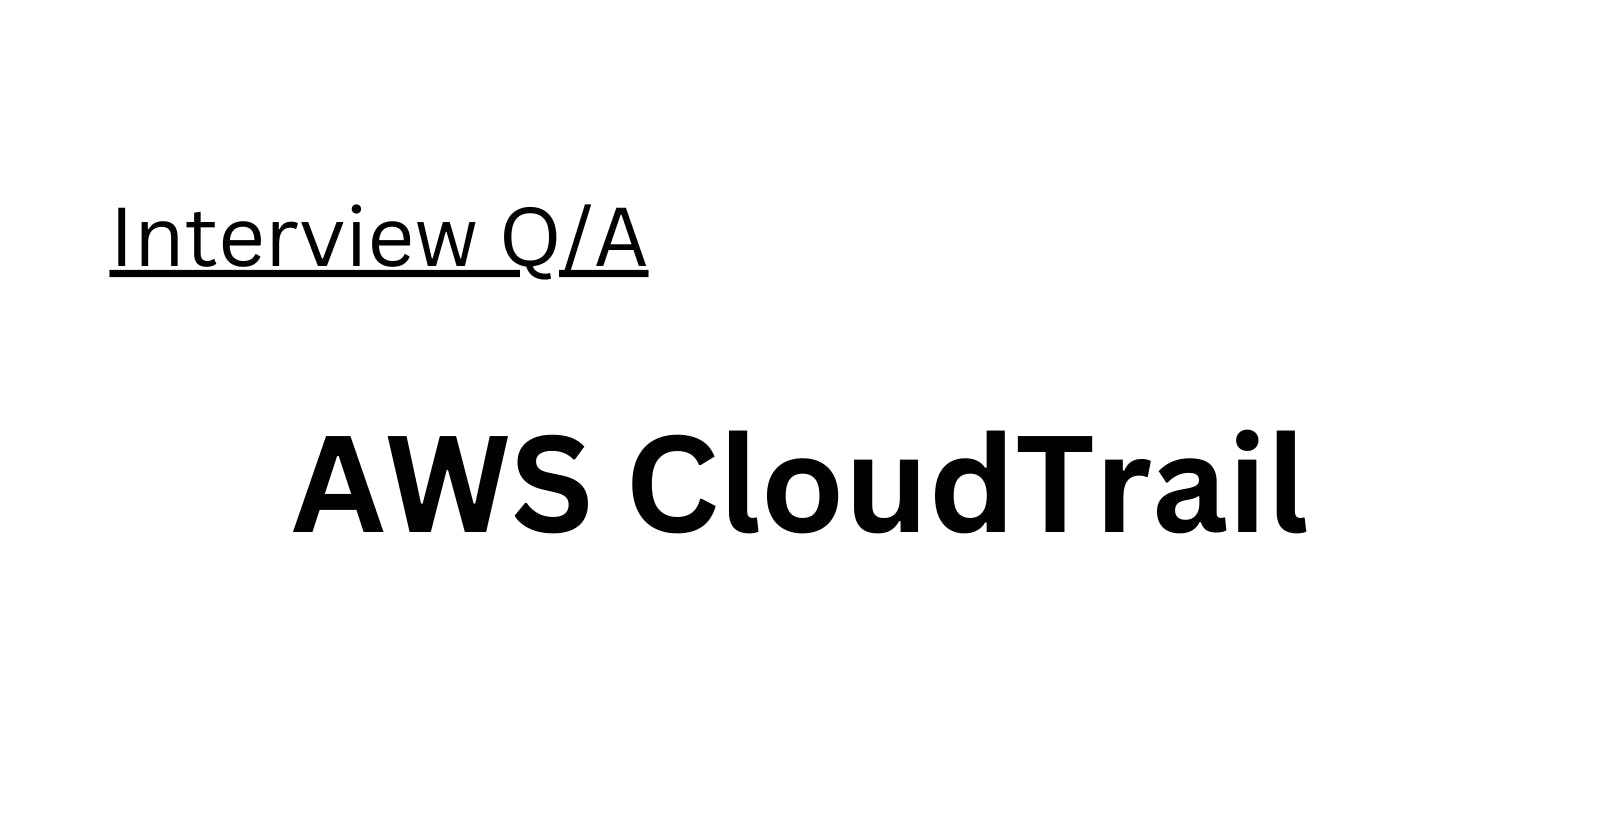 AWS CloudTrail Interview Q/A